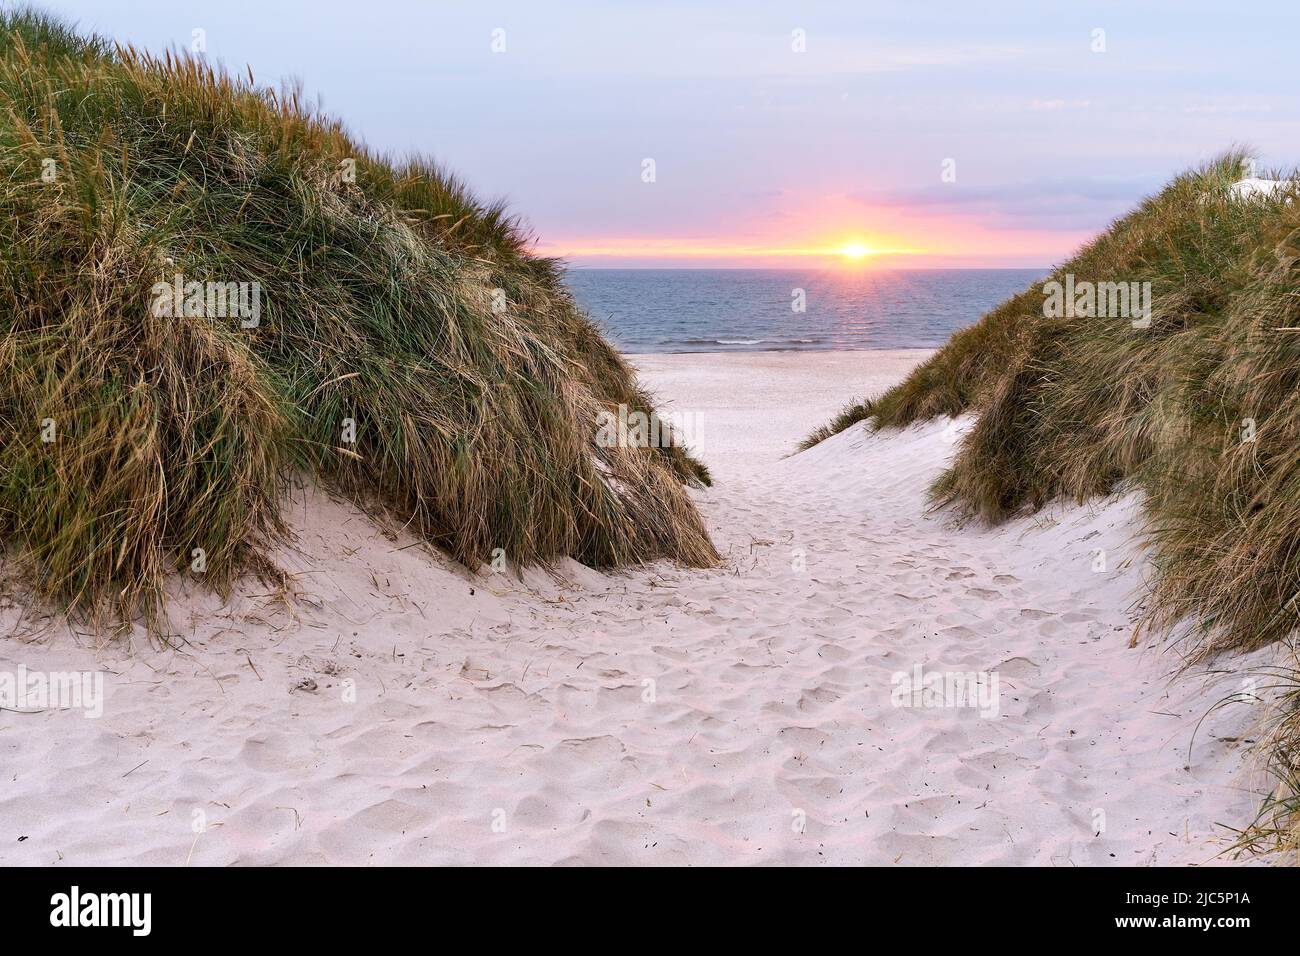 Dunes on the beach during sunset in Denmark Stock Photo